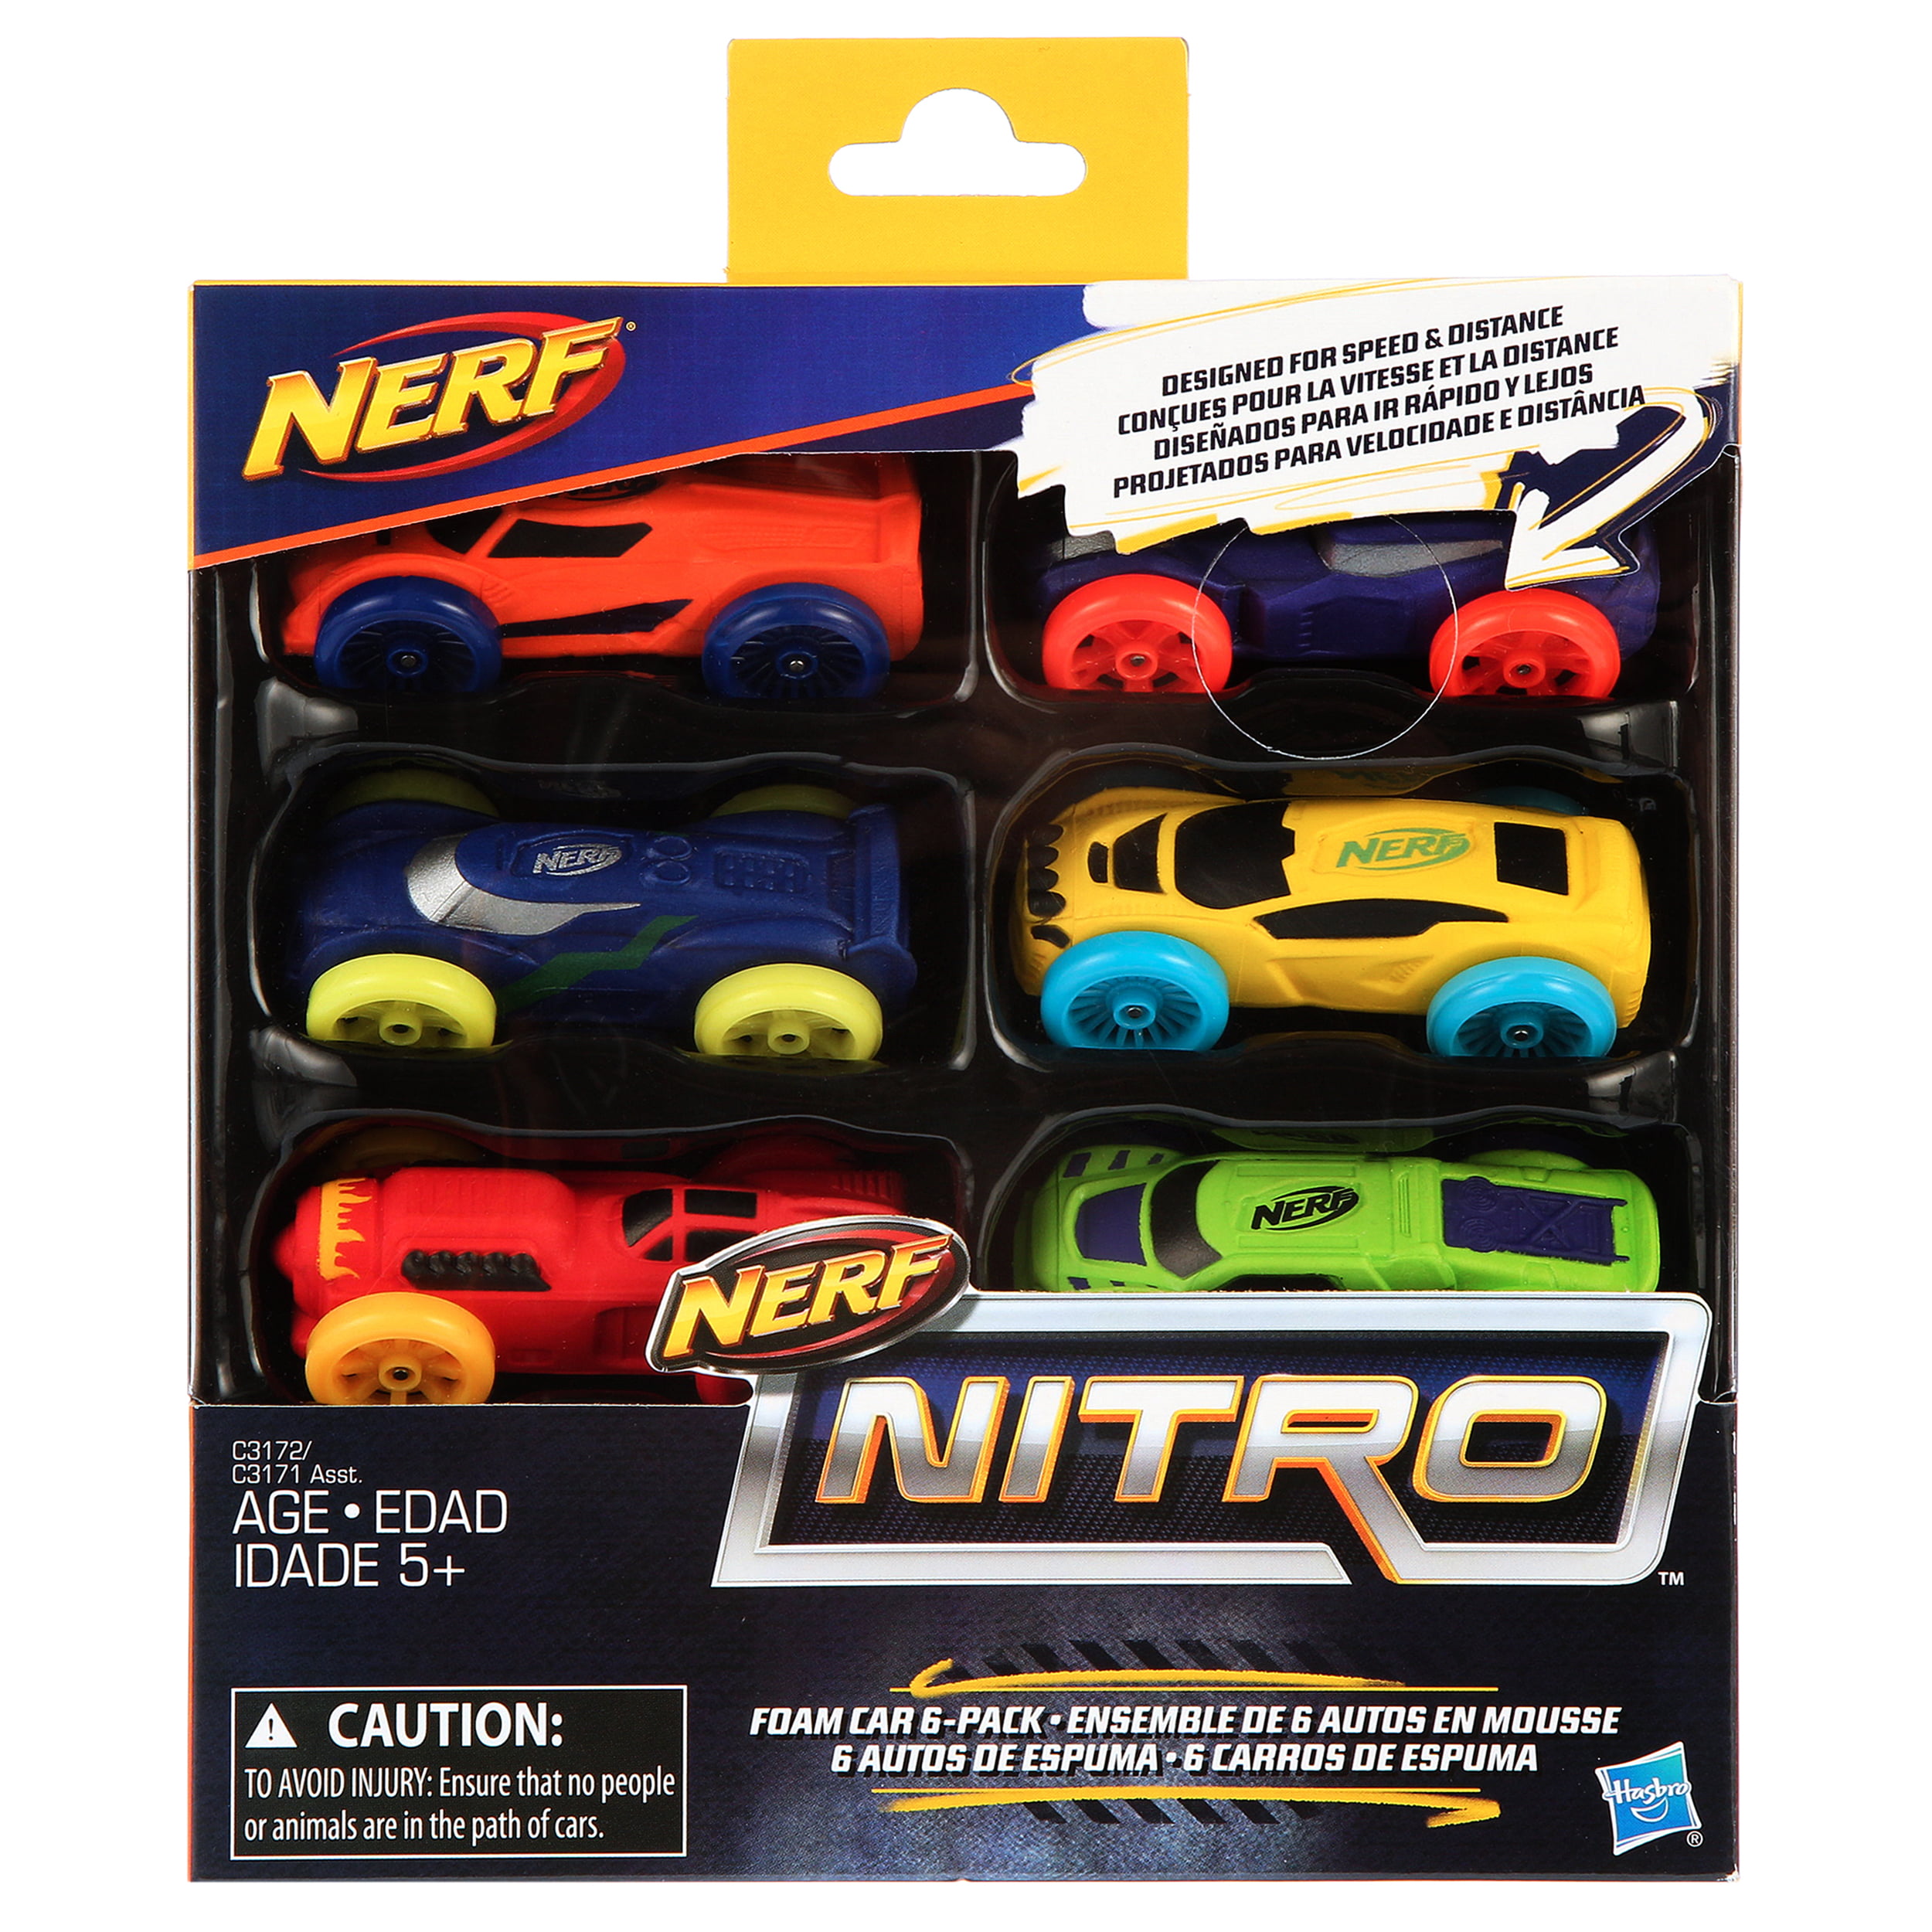 NERF NITRO Foam Car 3-pack Hasbro Toy 2016 for sale online 